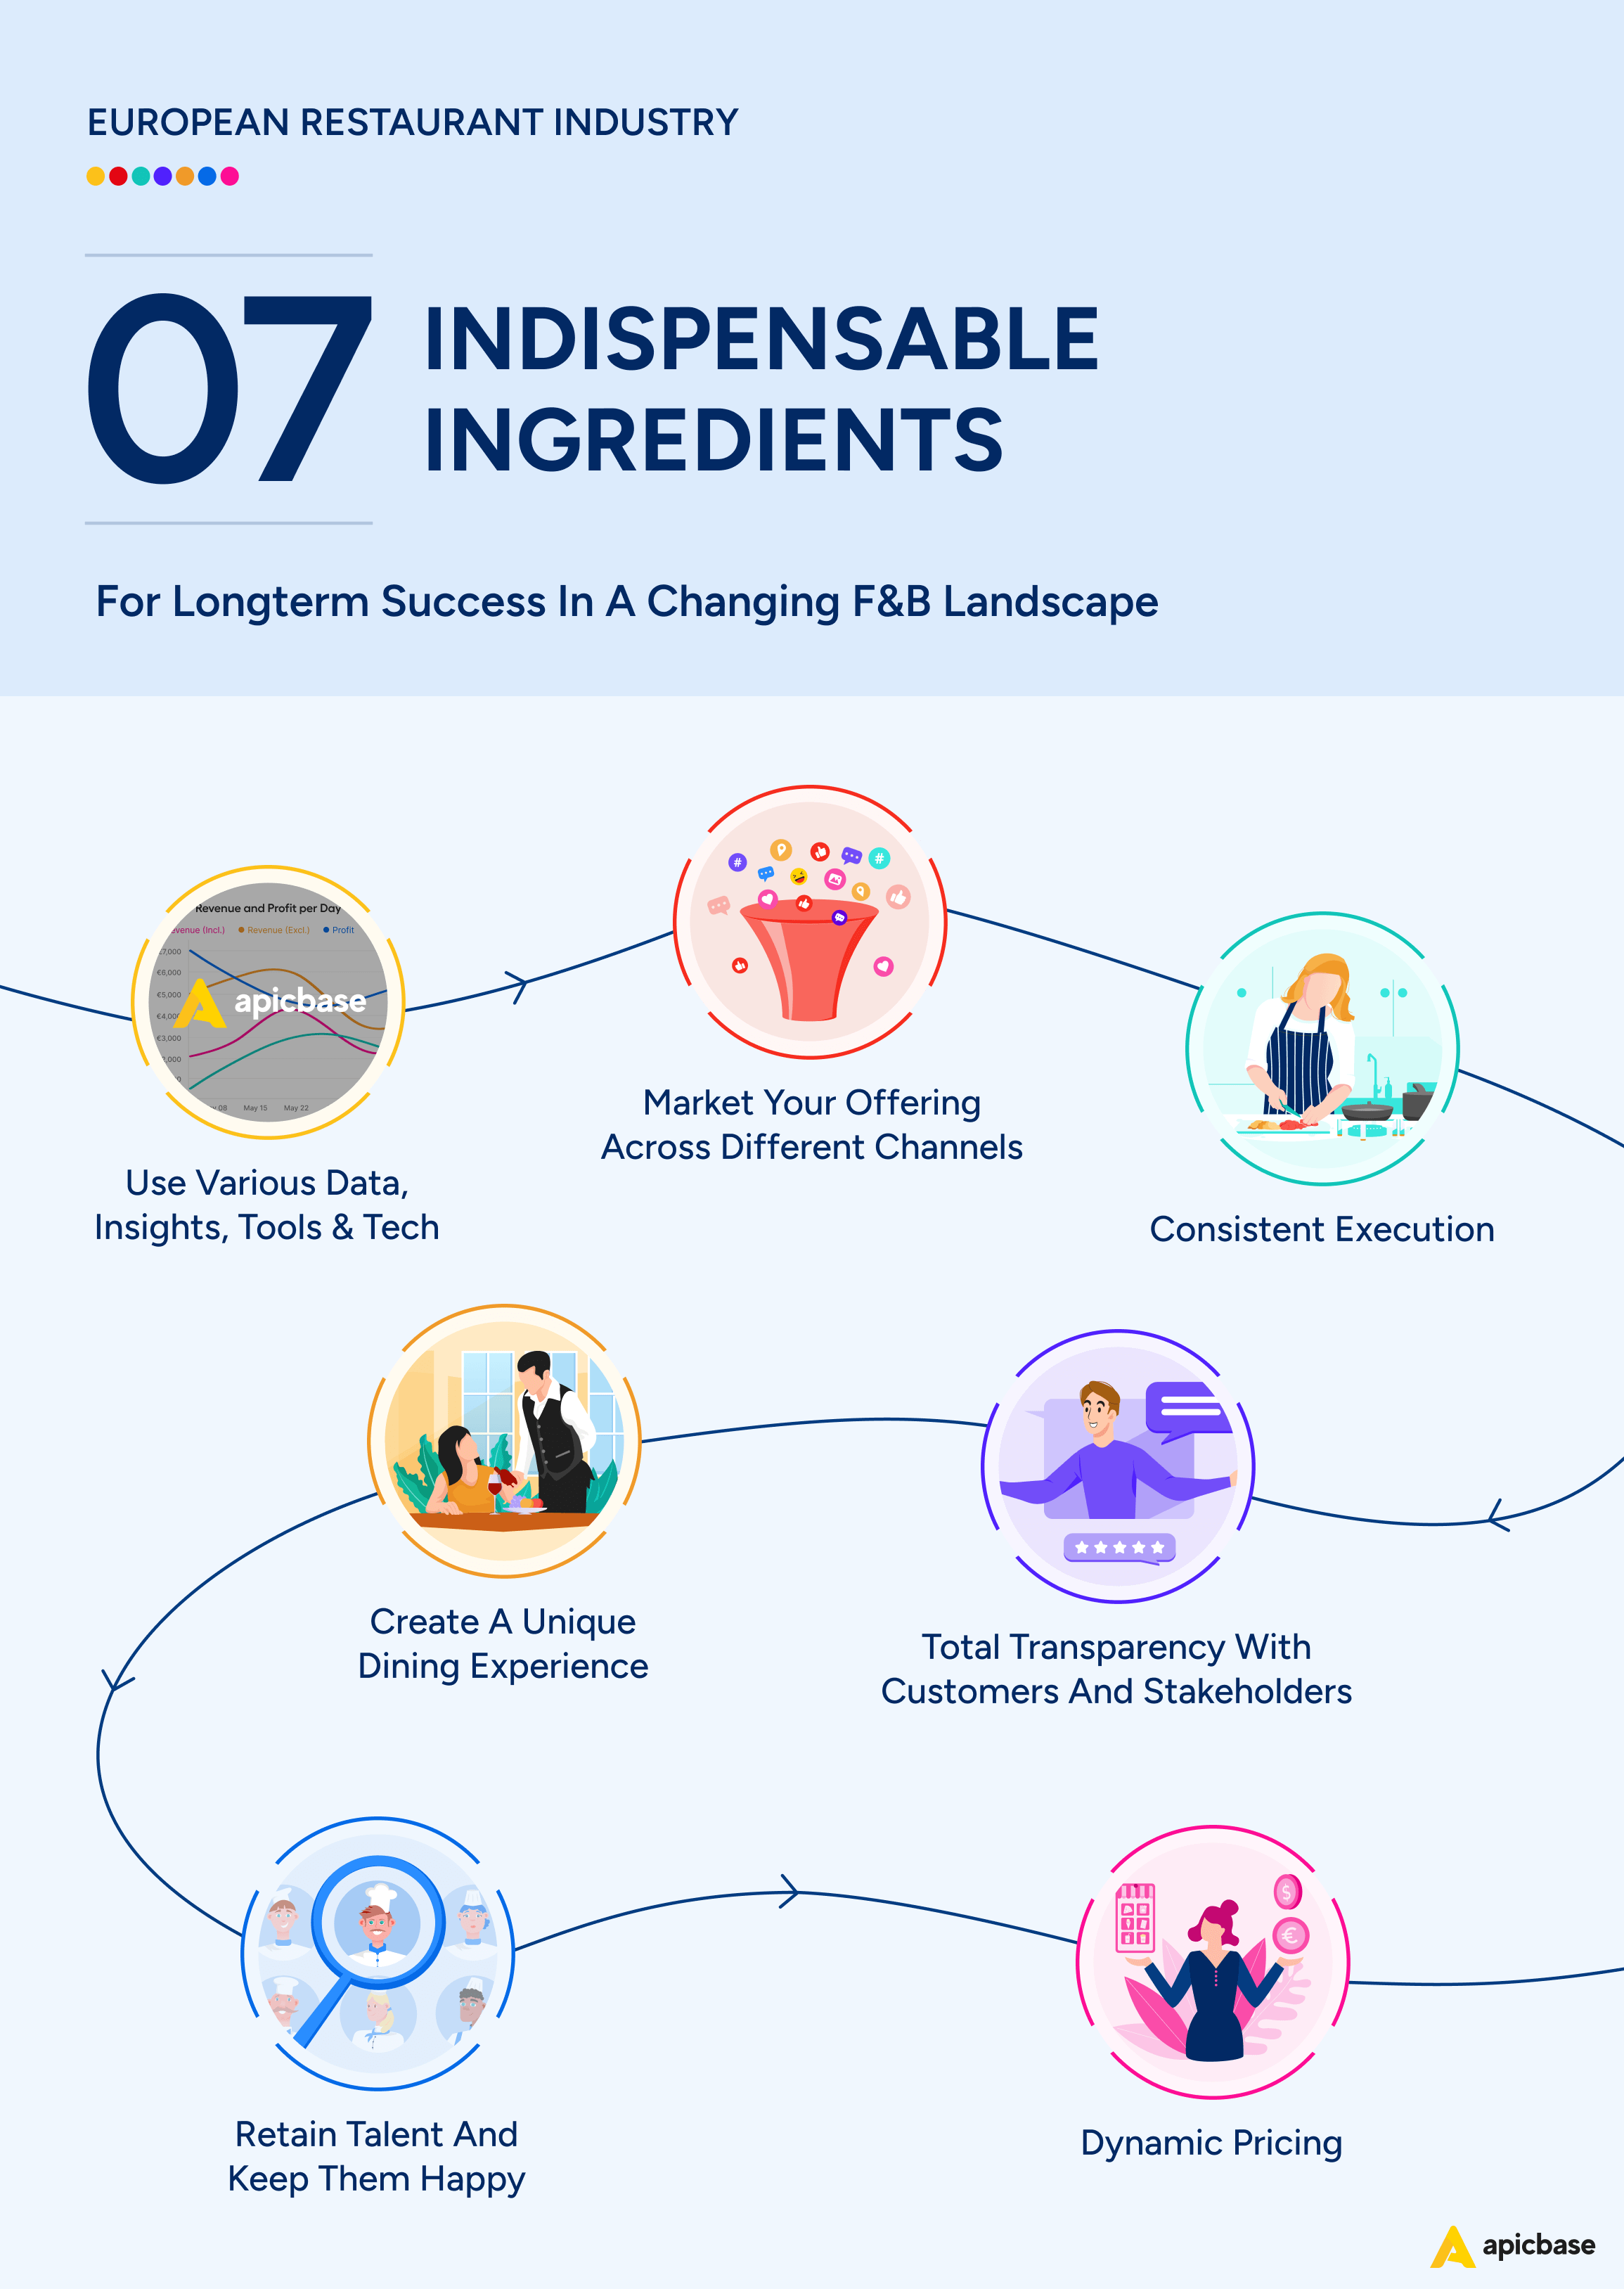 European Restaurant Industry - 7 ingredients